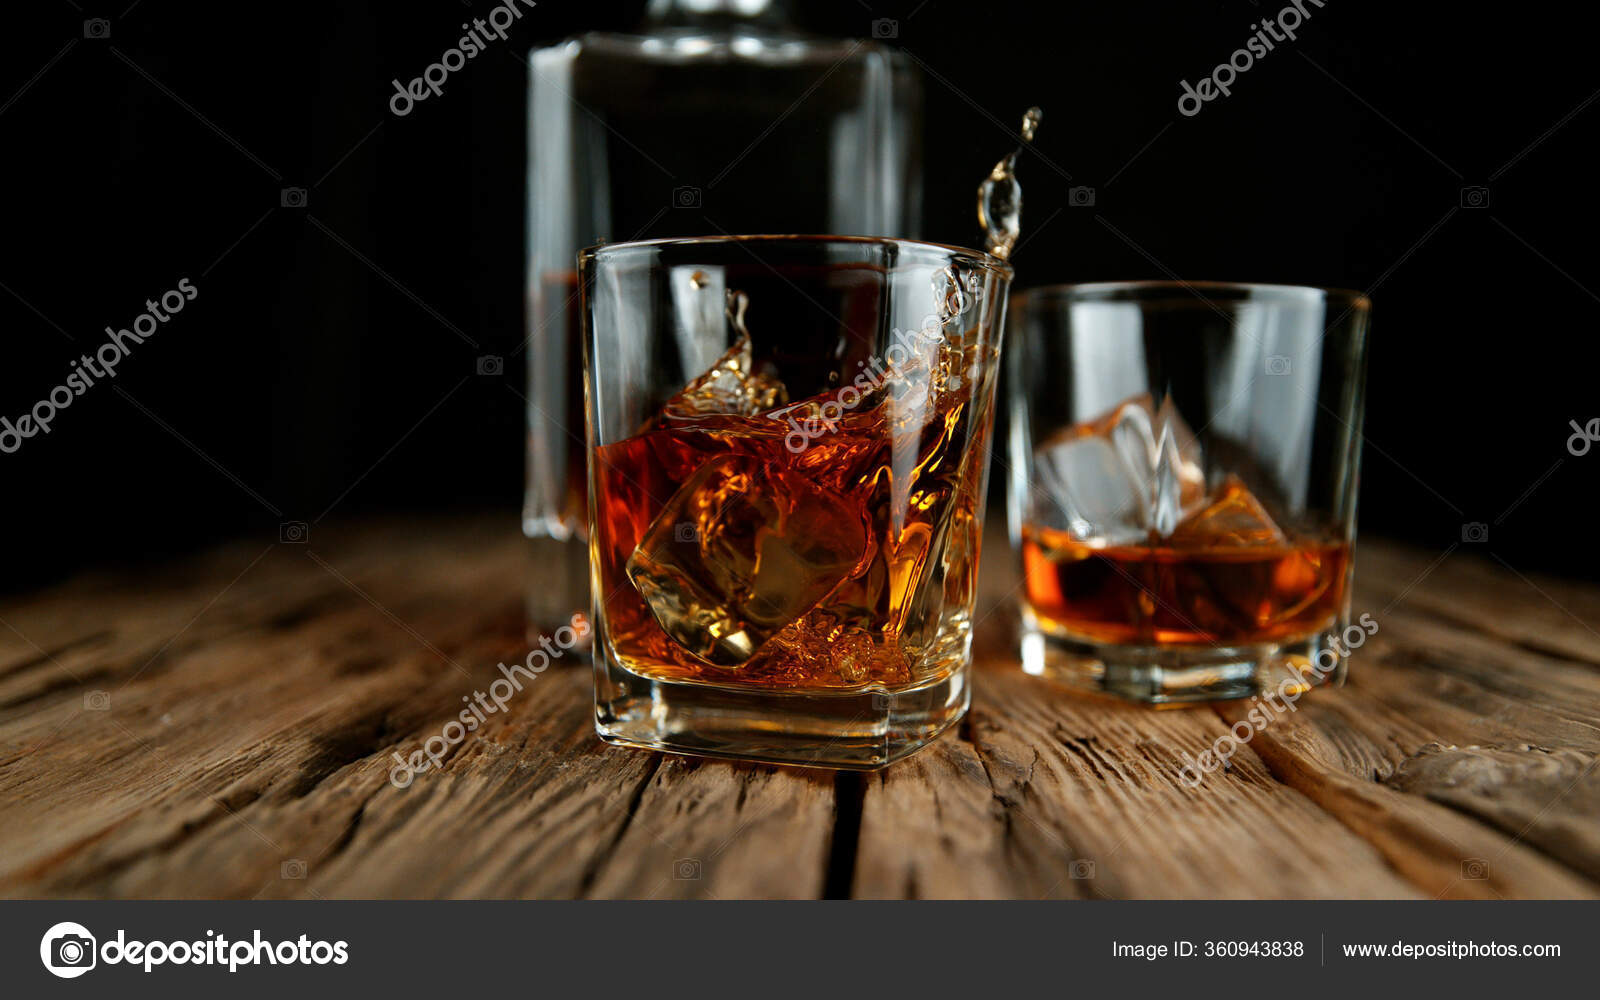 https://st3.depositphotos.com/1105977/36094/i/1600/depositphotos_360943838-stock-photo-splashing-whiskey-glass-ice-cubes.jpg